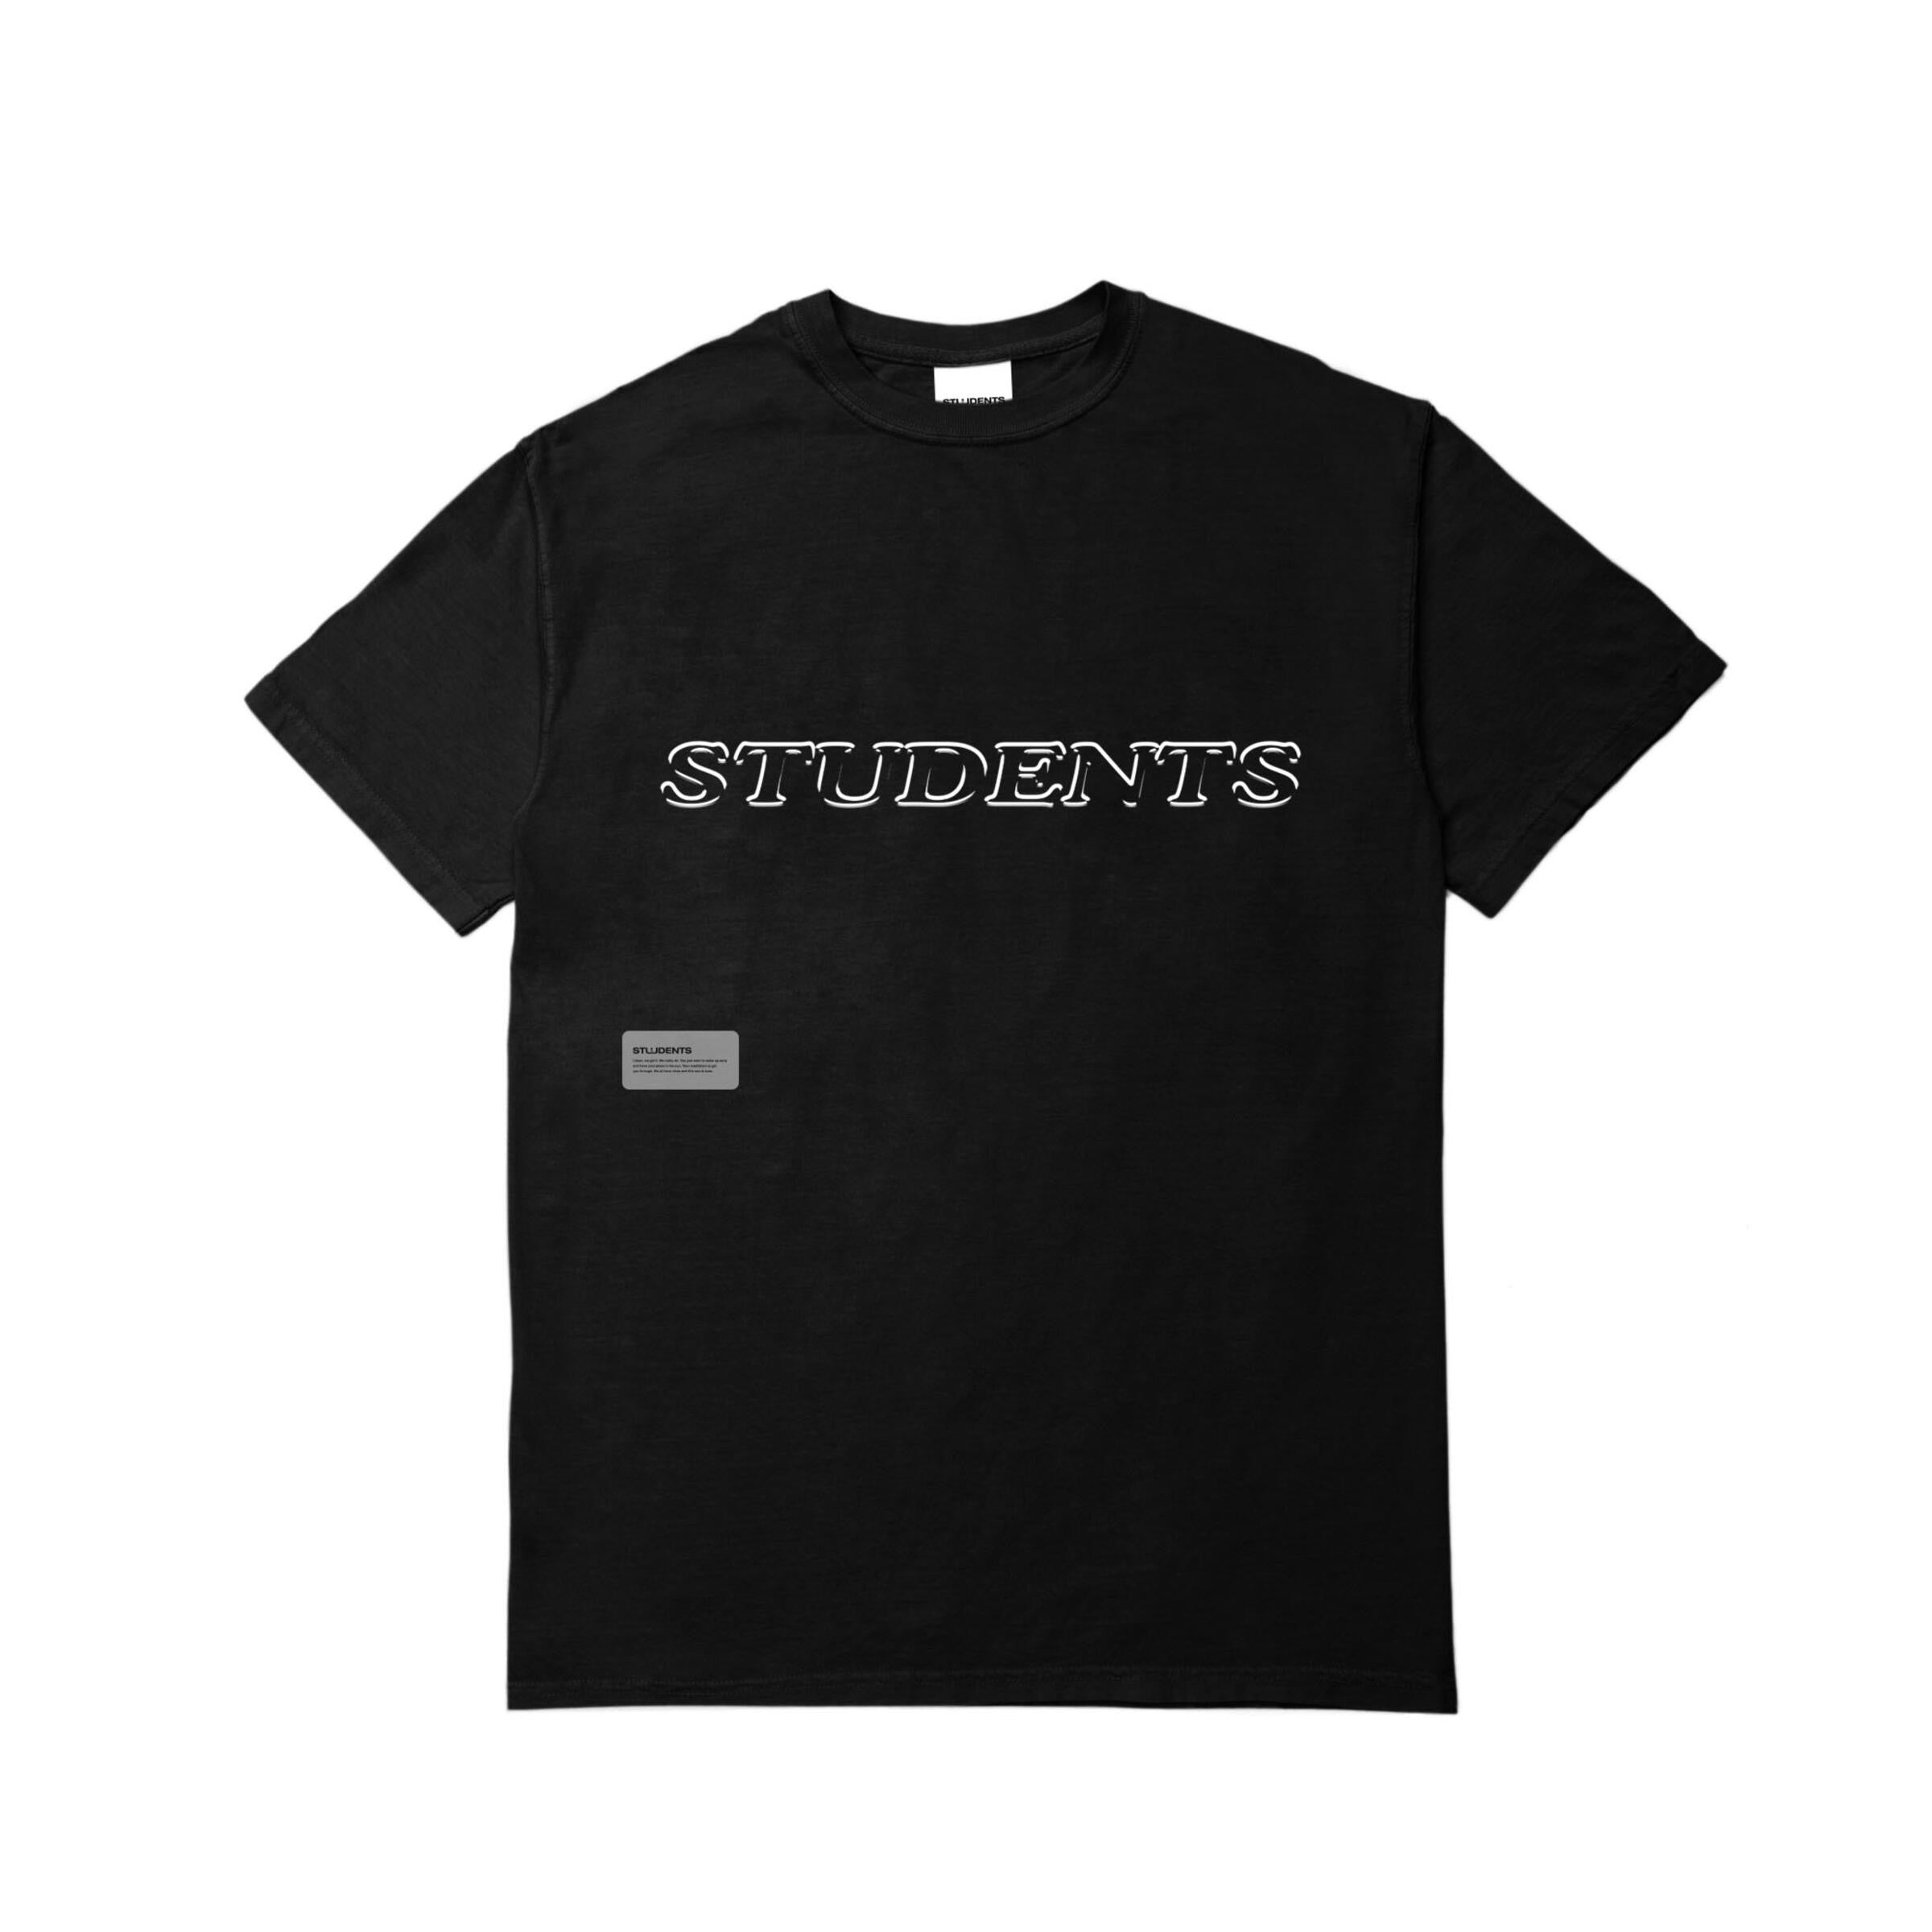 Students Golden Glory T-shirt - Black